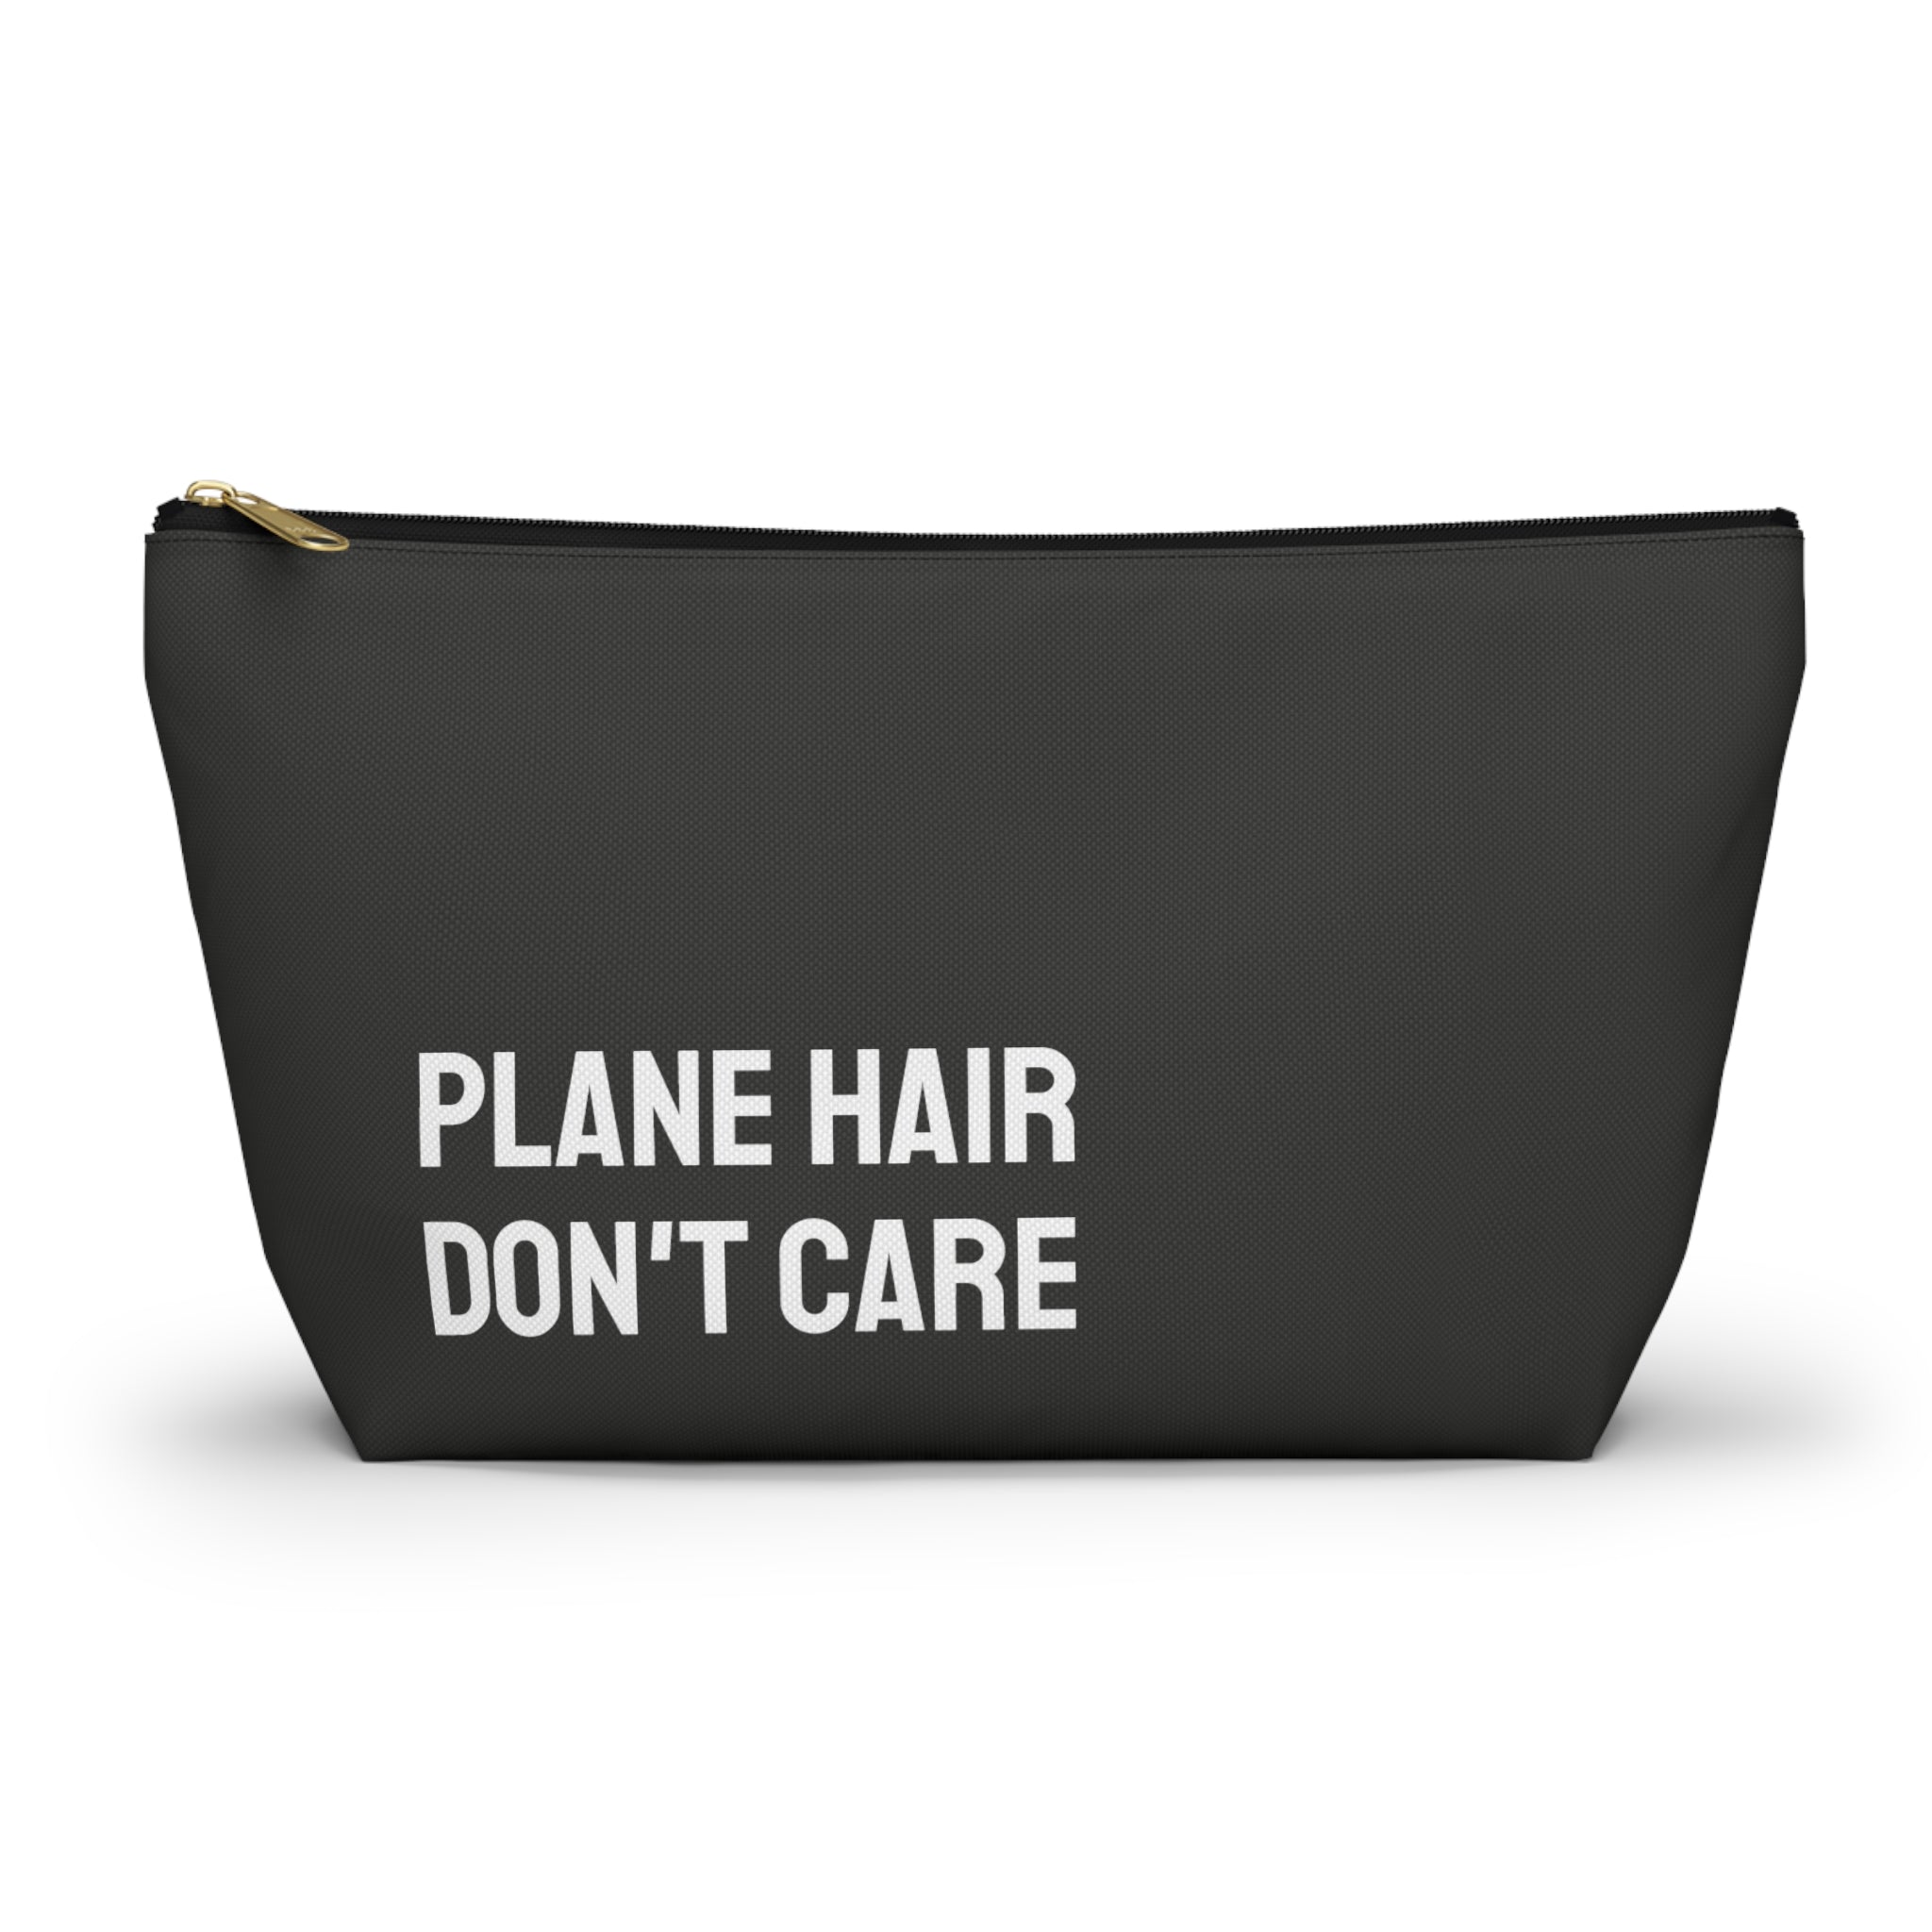 Plane hair don't care Pouch (Black)